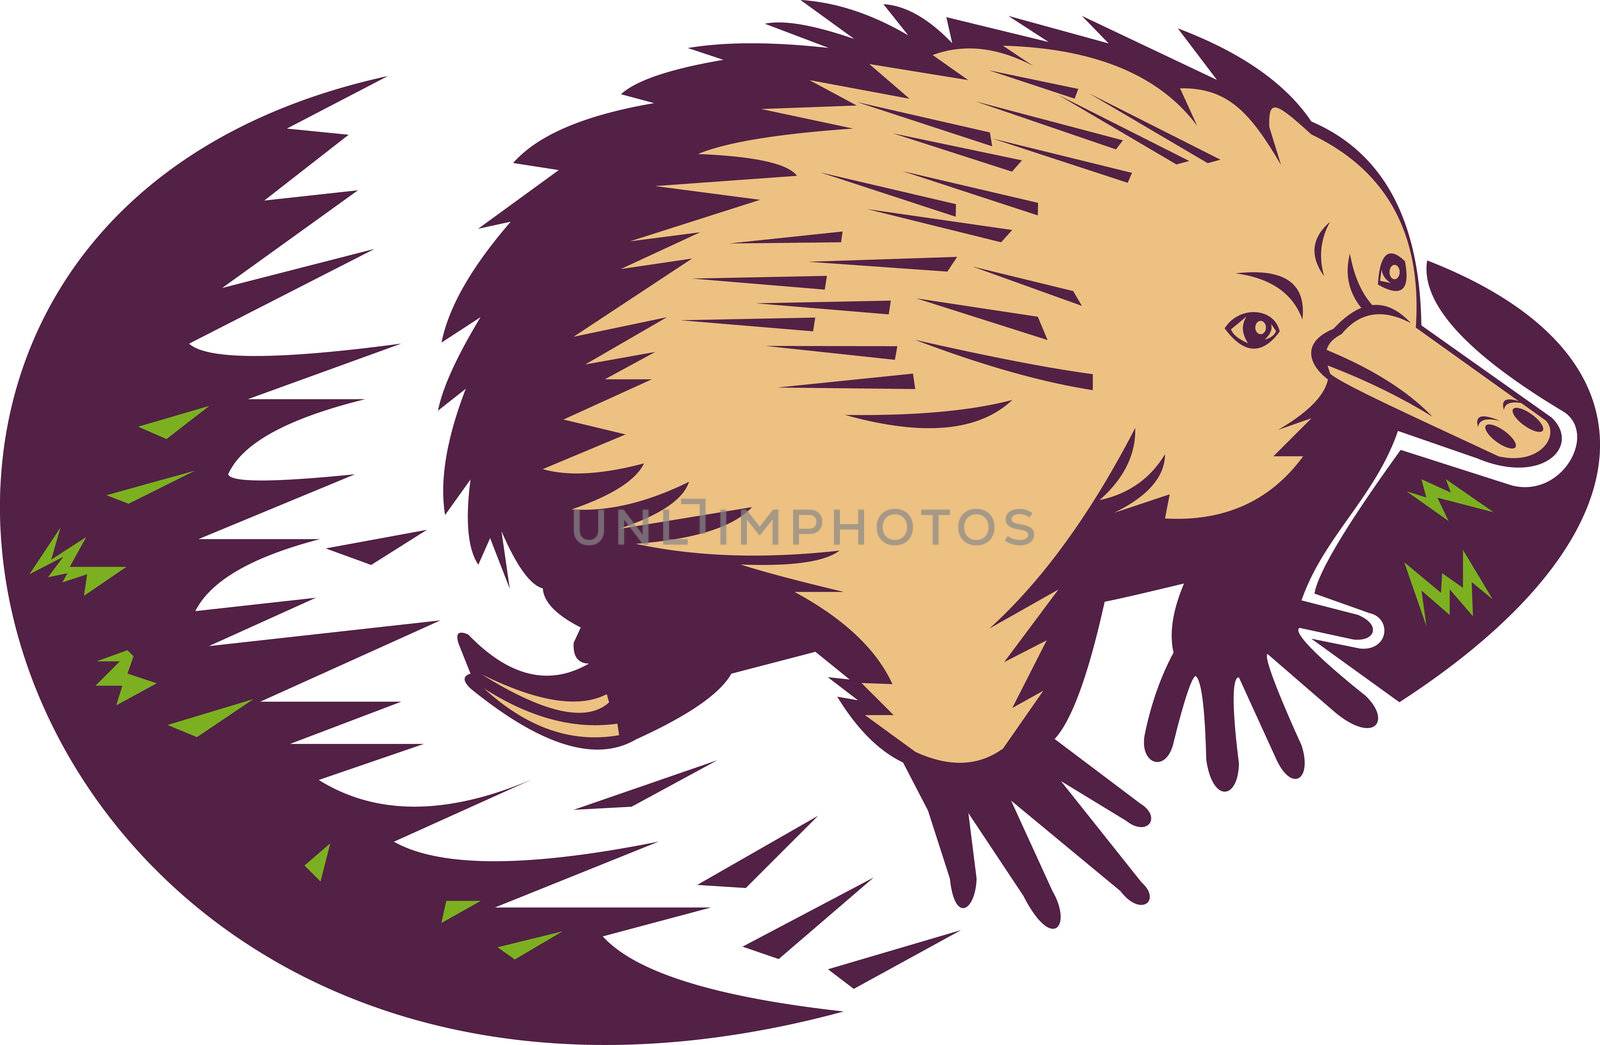 echina spiny anteater by patrimonio